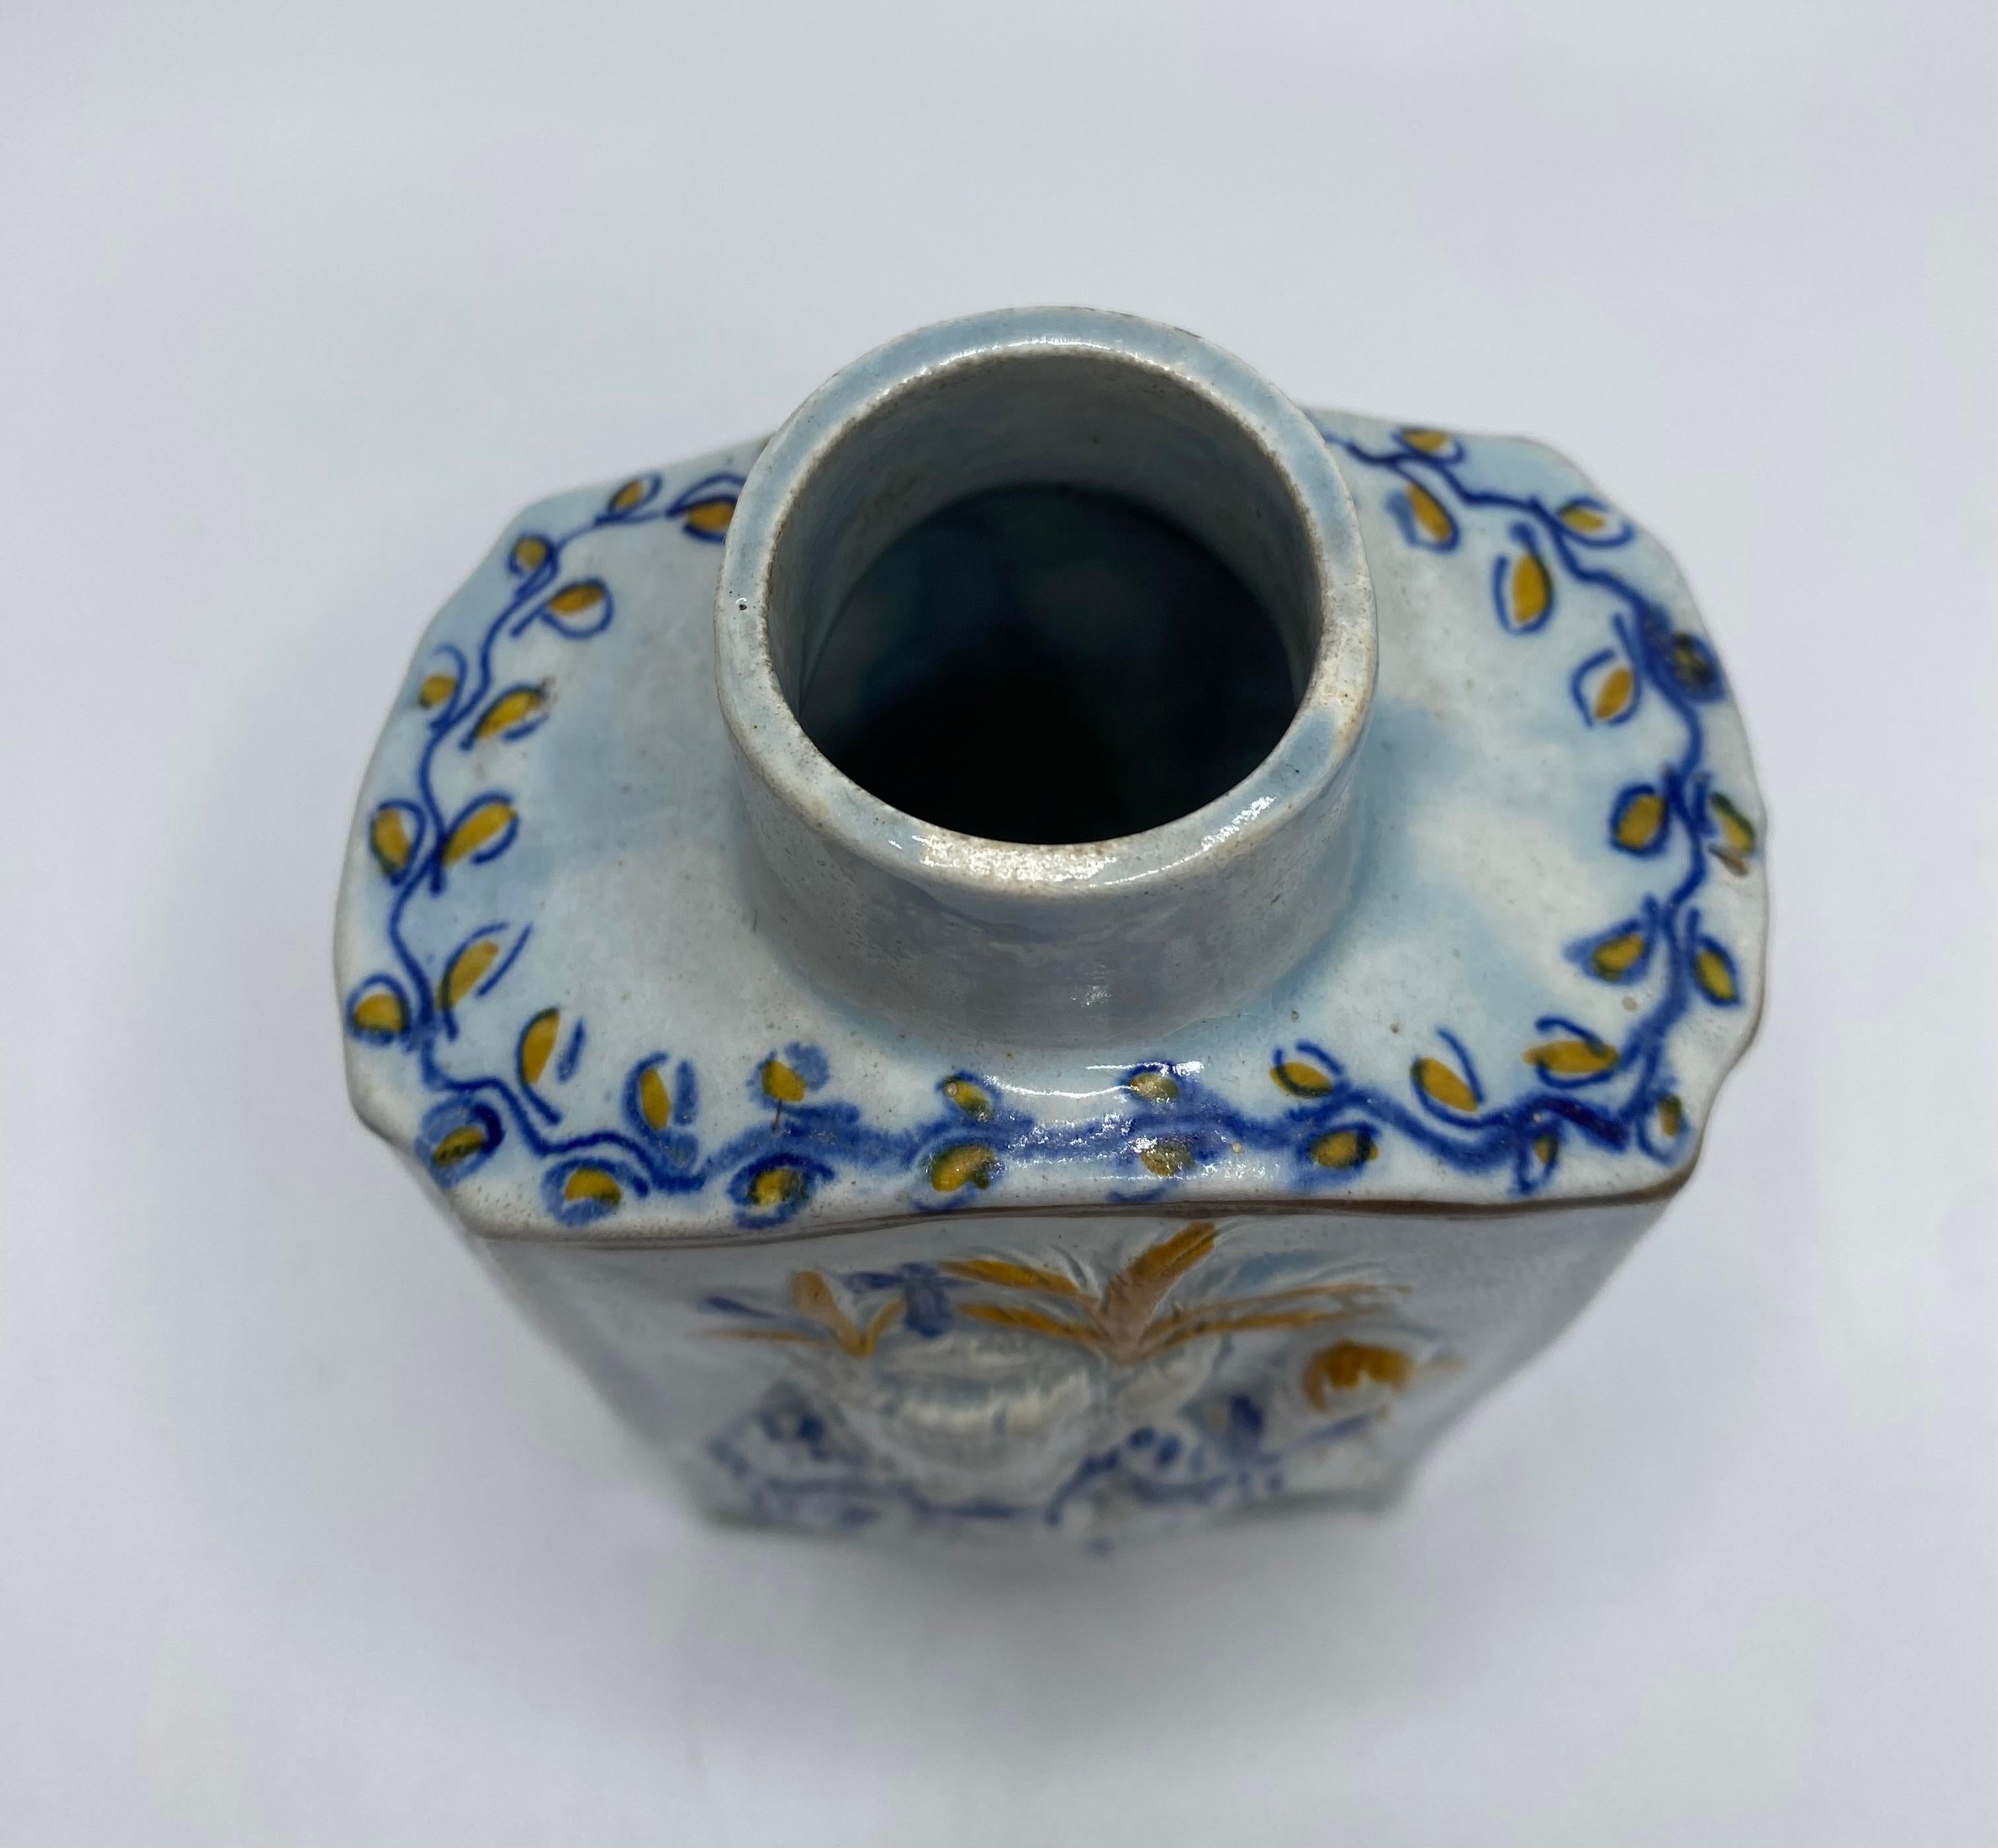 Prattware pottery ‘Macaroni’ tea caddy and cover, c. 1800. 2